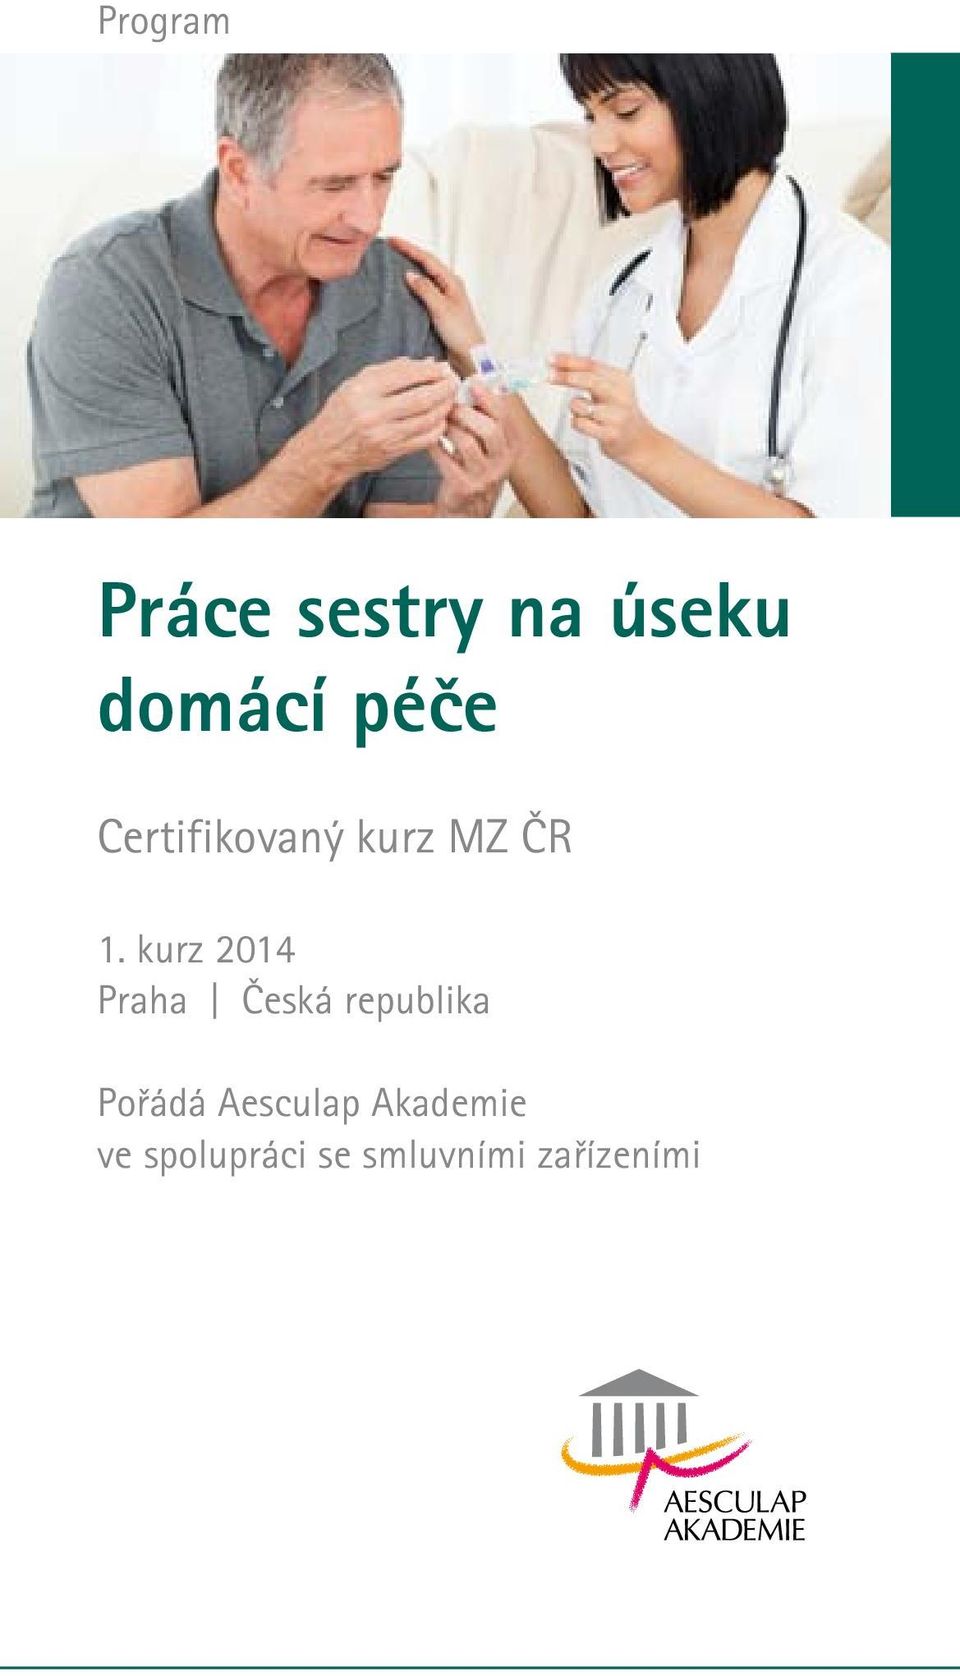 kurz 2014 Praha Česká republika Pořádá